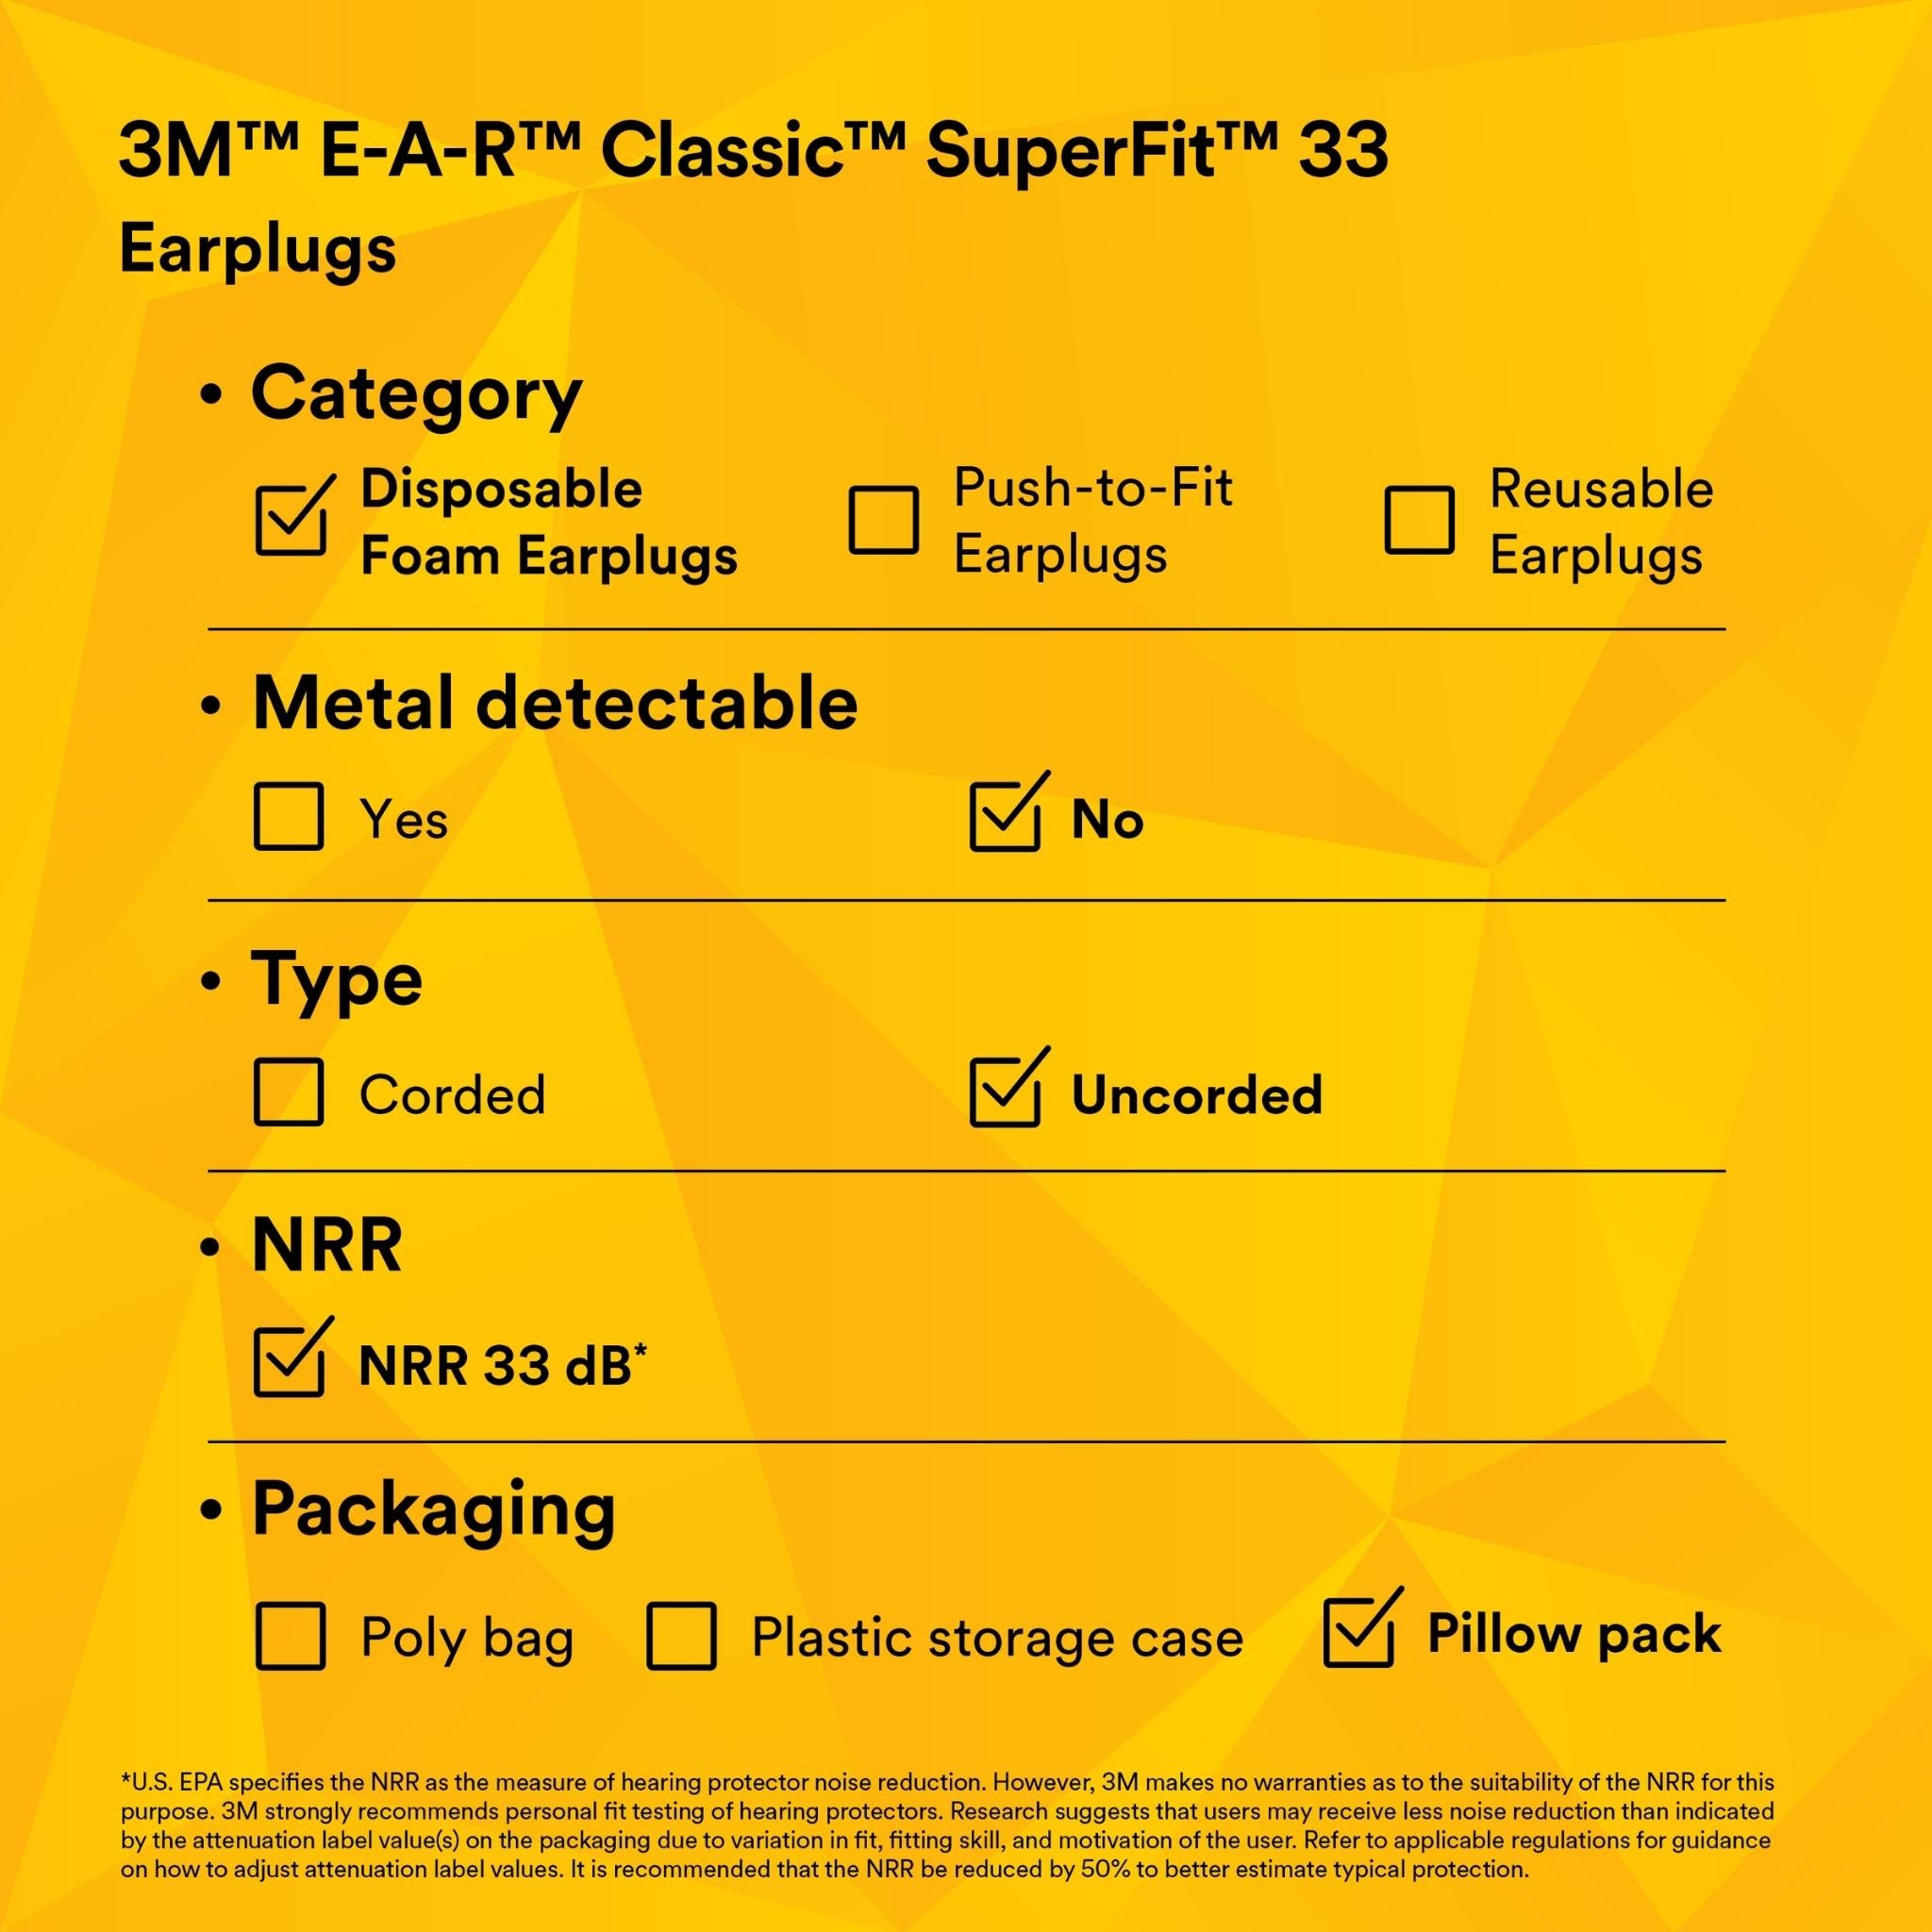 3M™ E-A-R™ Classic™ SuperFit™ 33 Earplugs 310-1008, Uncorded, Pillow Pack, 2000 Pair/Case